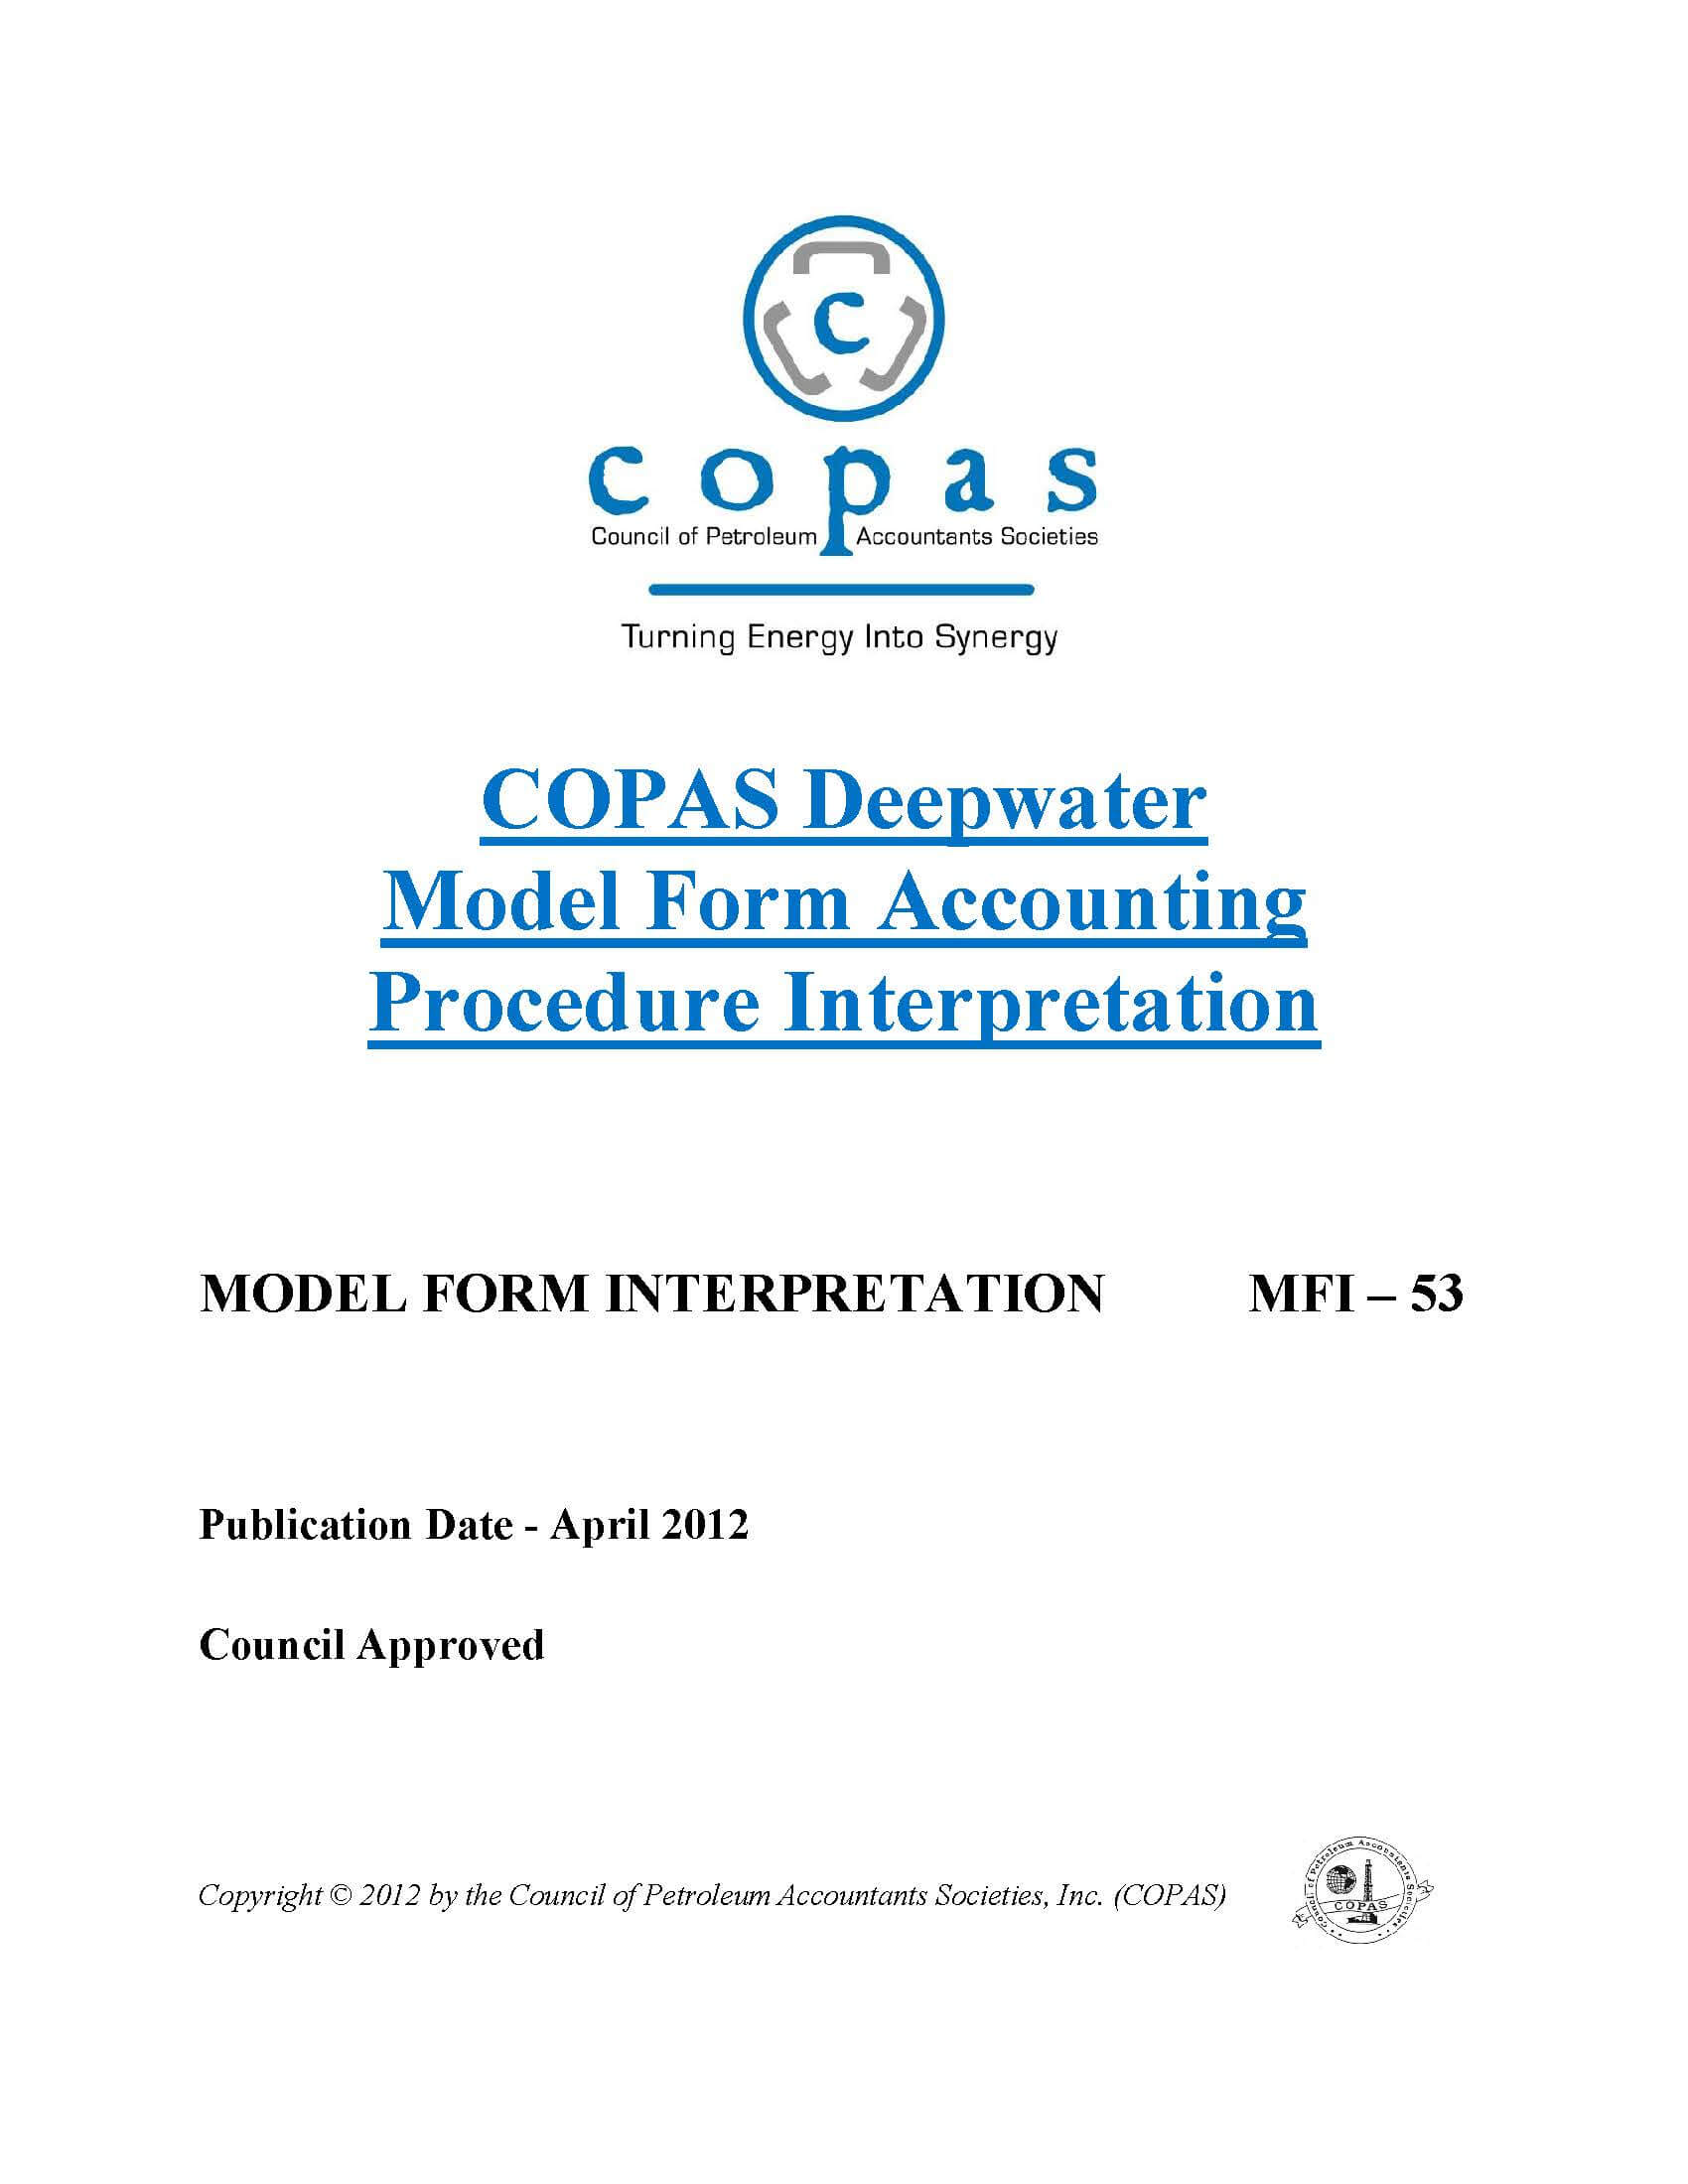 MFI-53 Deepwater Model Form Accounting Procedure Interpretation